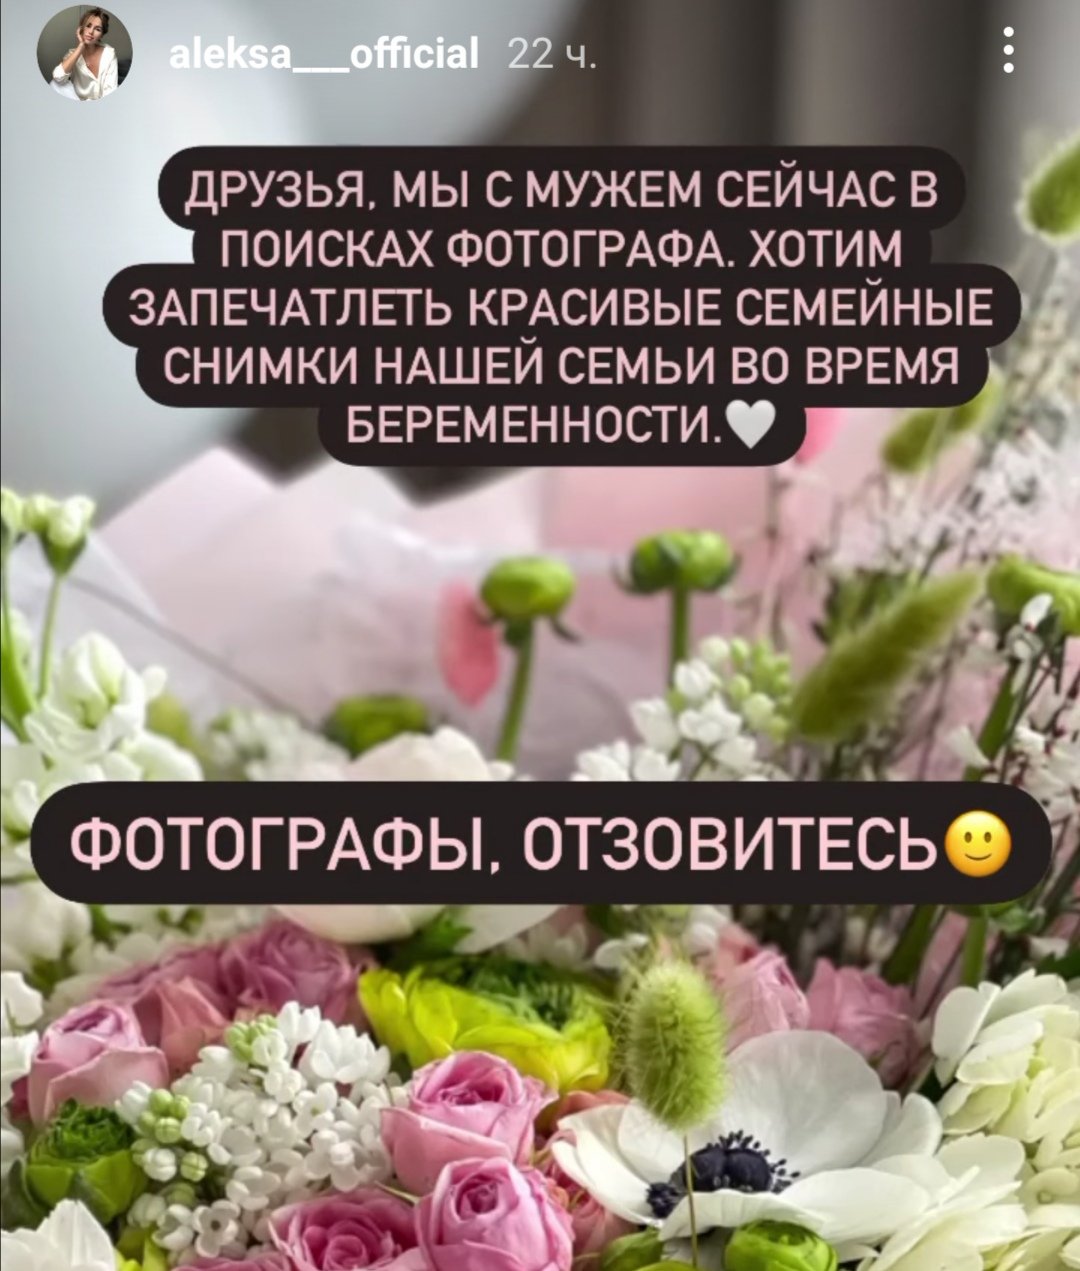 Певица Алекса намекнула, что вышла замуж за фитнес-тренера Вячеслава Дайчева